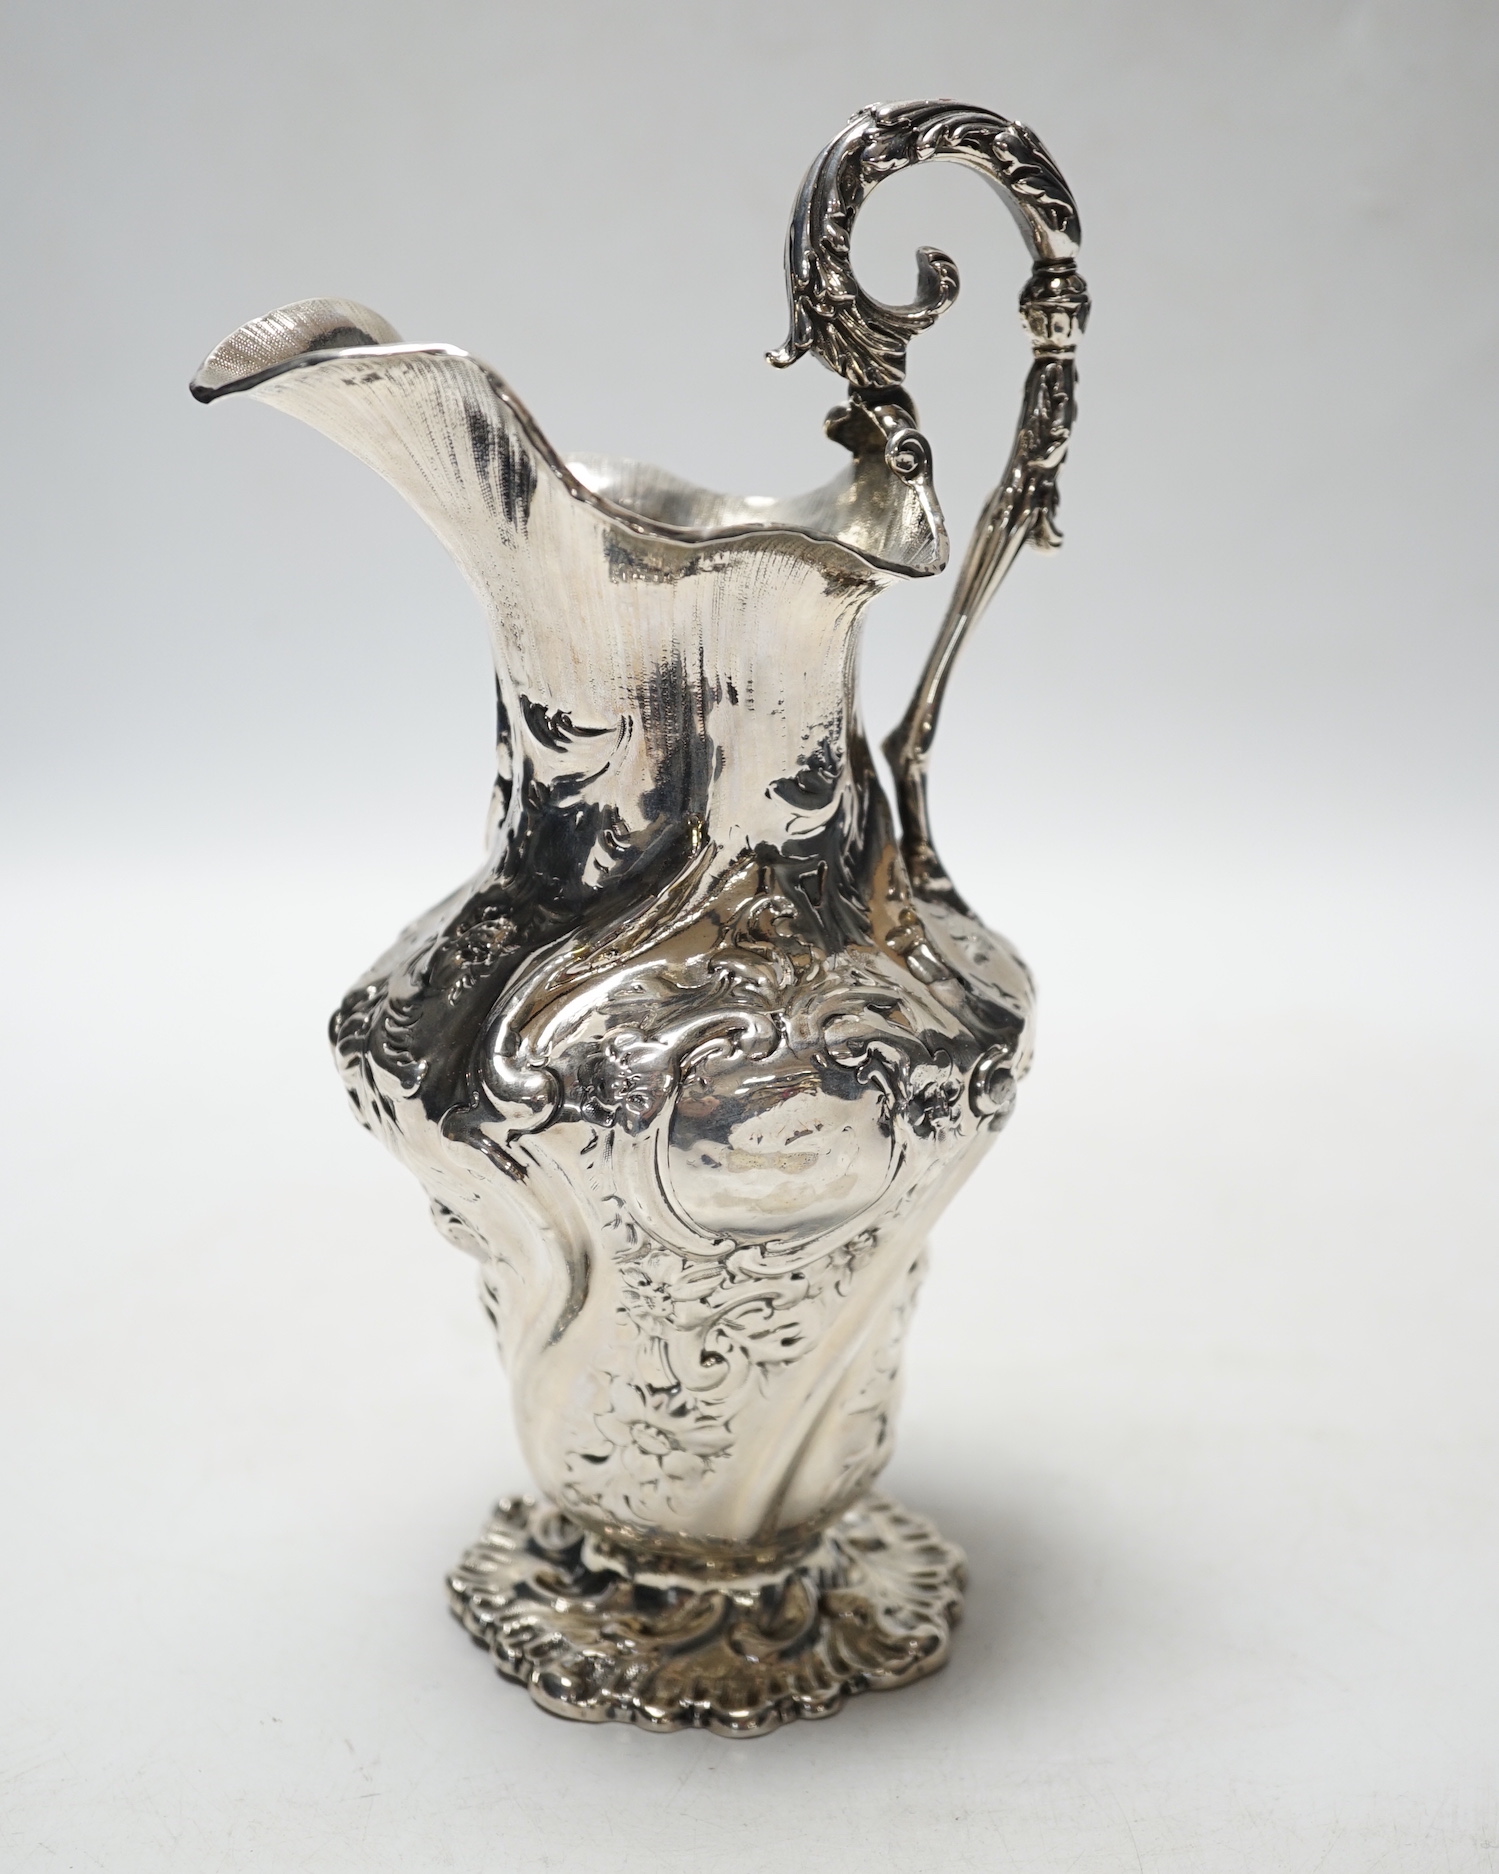 An ornate early Victorian silver cream jug, Charles Fox, London, 1838, 20.7cm, 9.8oz.